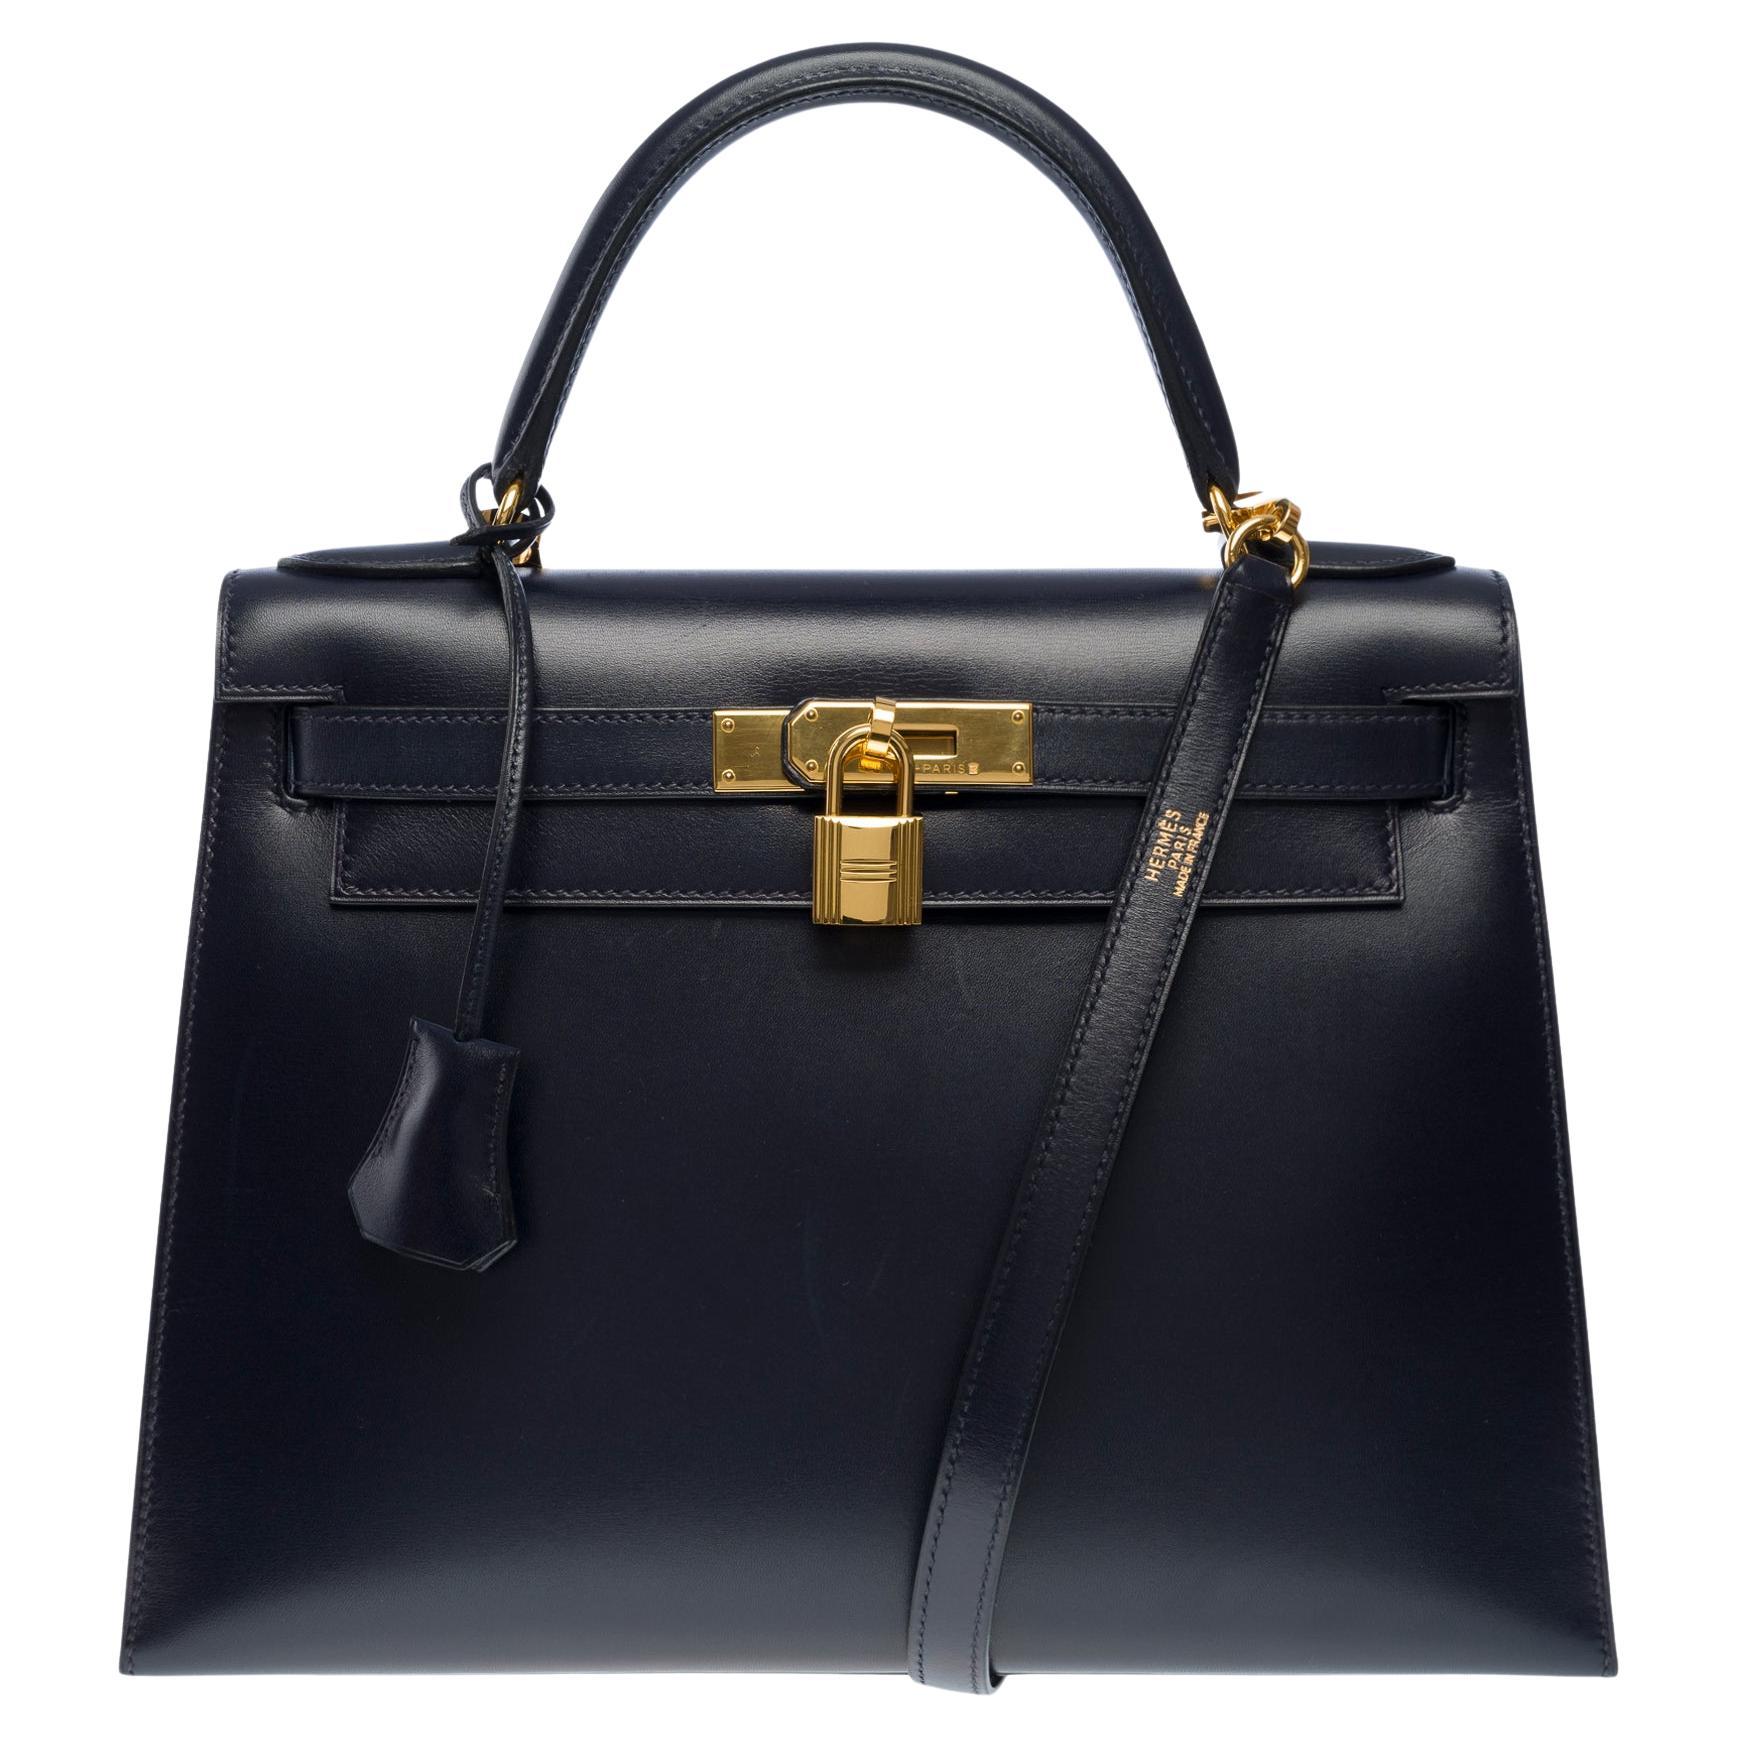 Hermes Kelly 28 sellier handbag strap in Navy Blue box calfskin leather, GHW For Sale